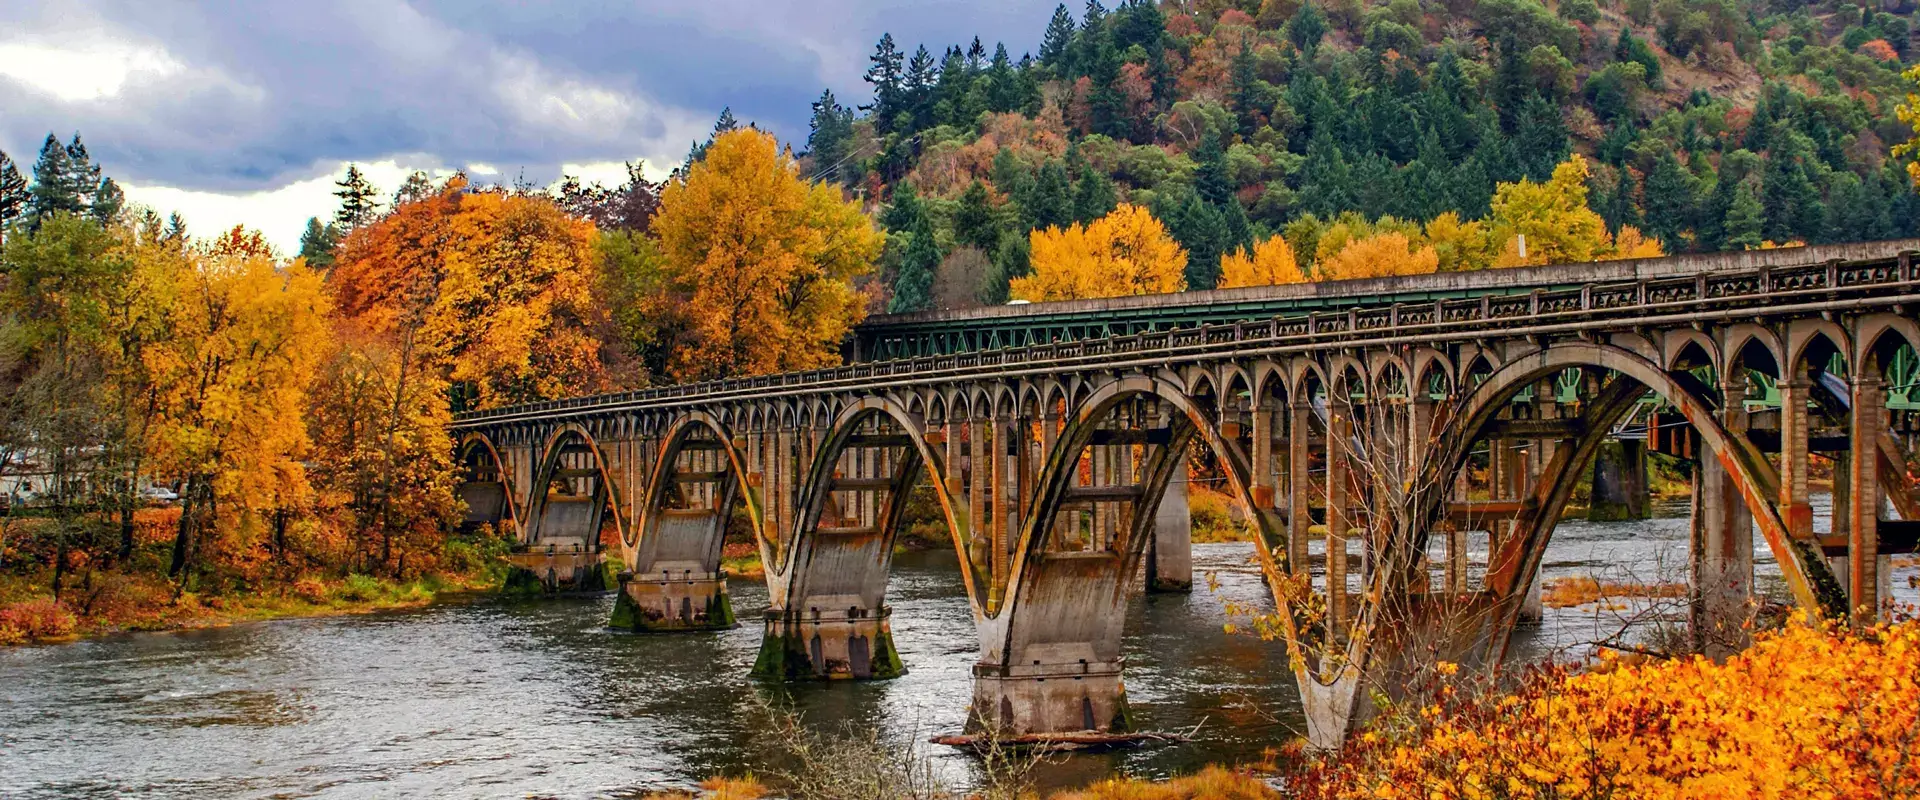 Bridge over the river in autumn scenery